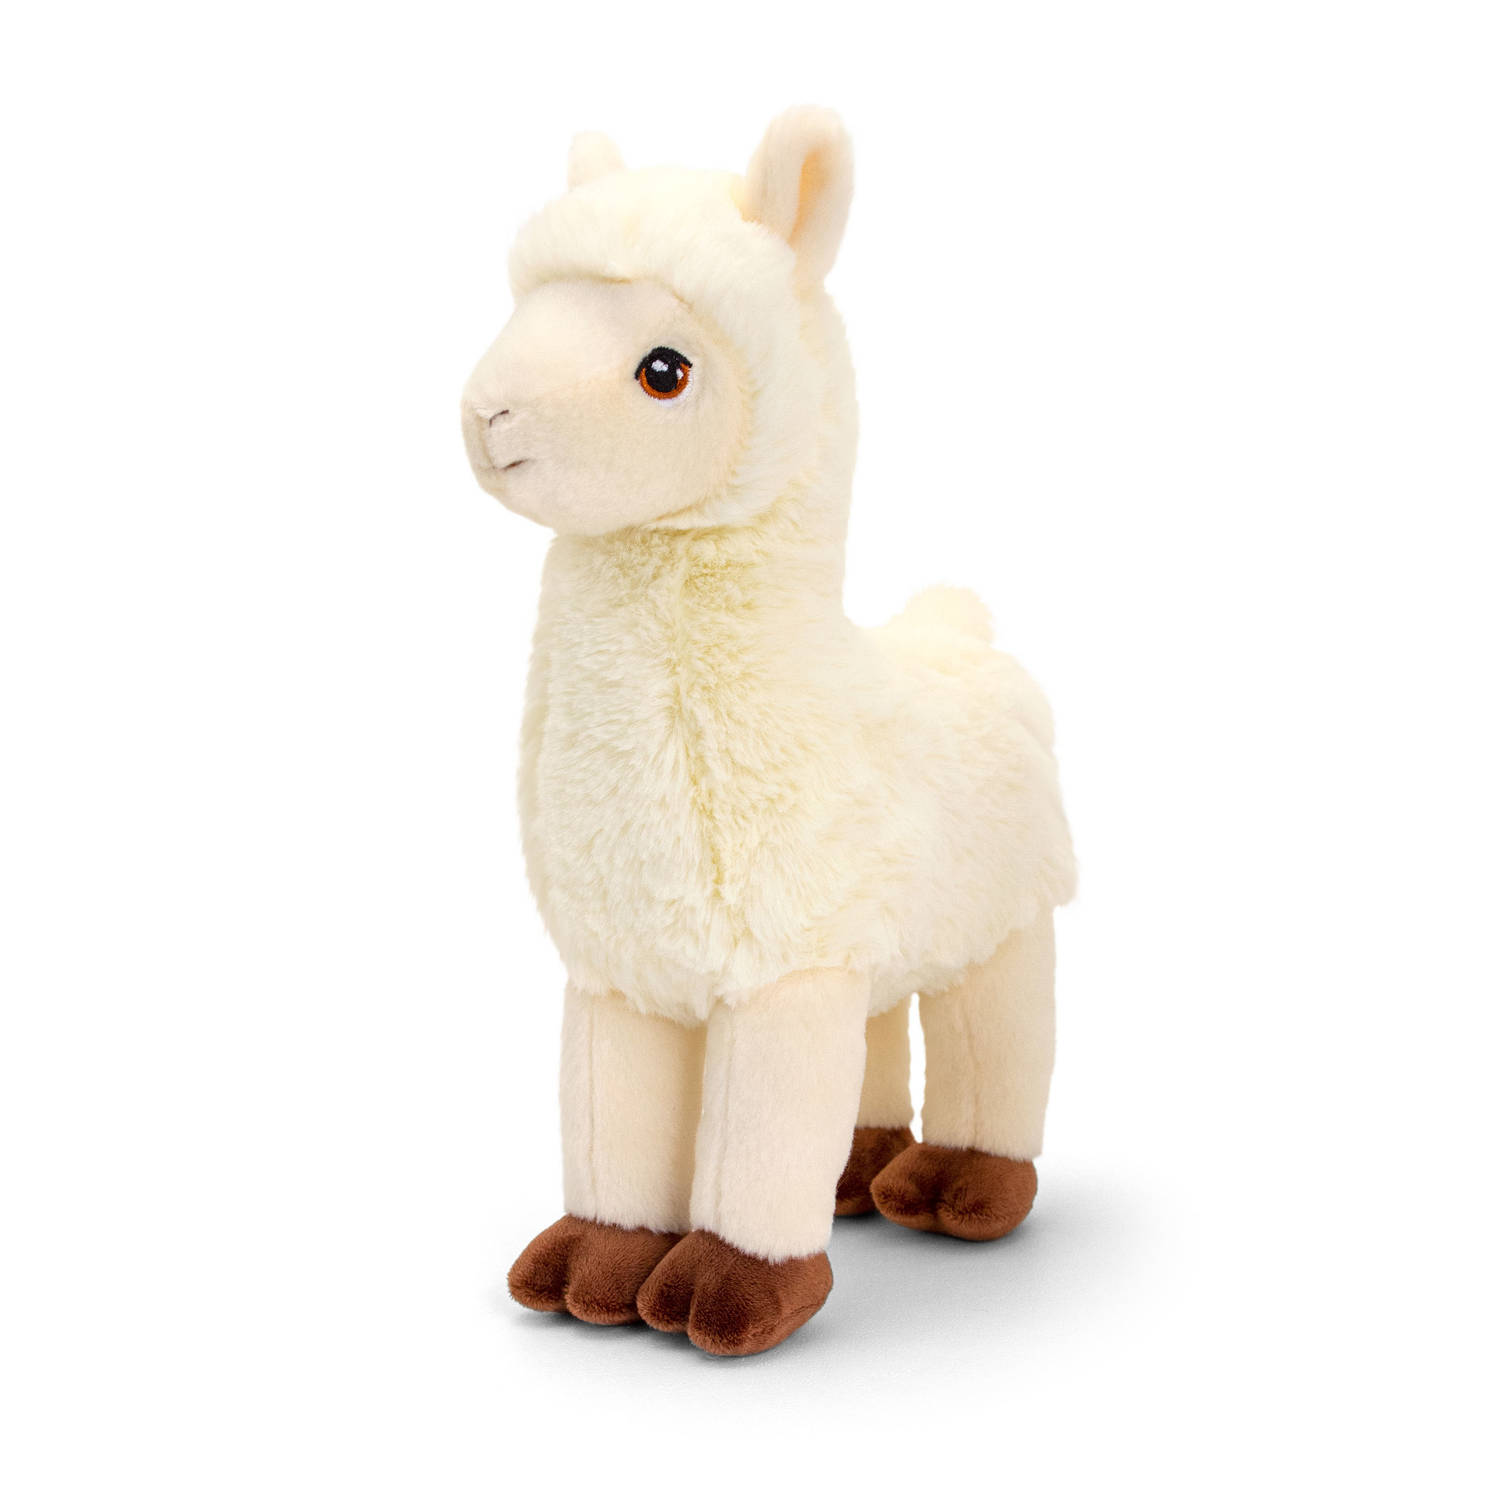 Pluche knuffel dieren witte lama 30 cm - Knuffelbeesten speelgoed